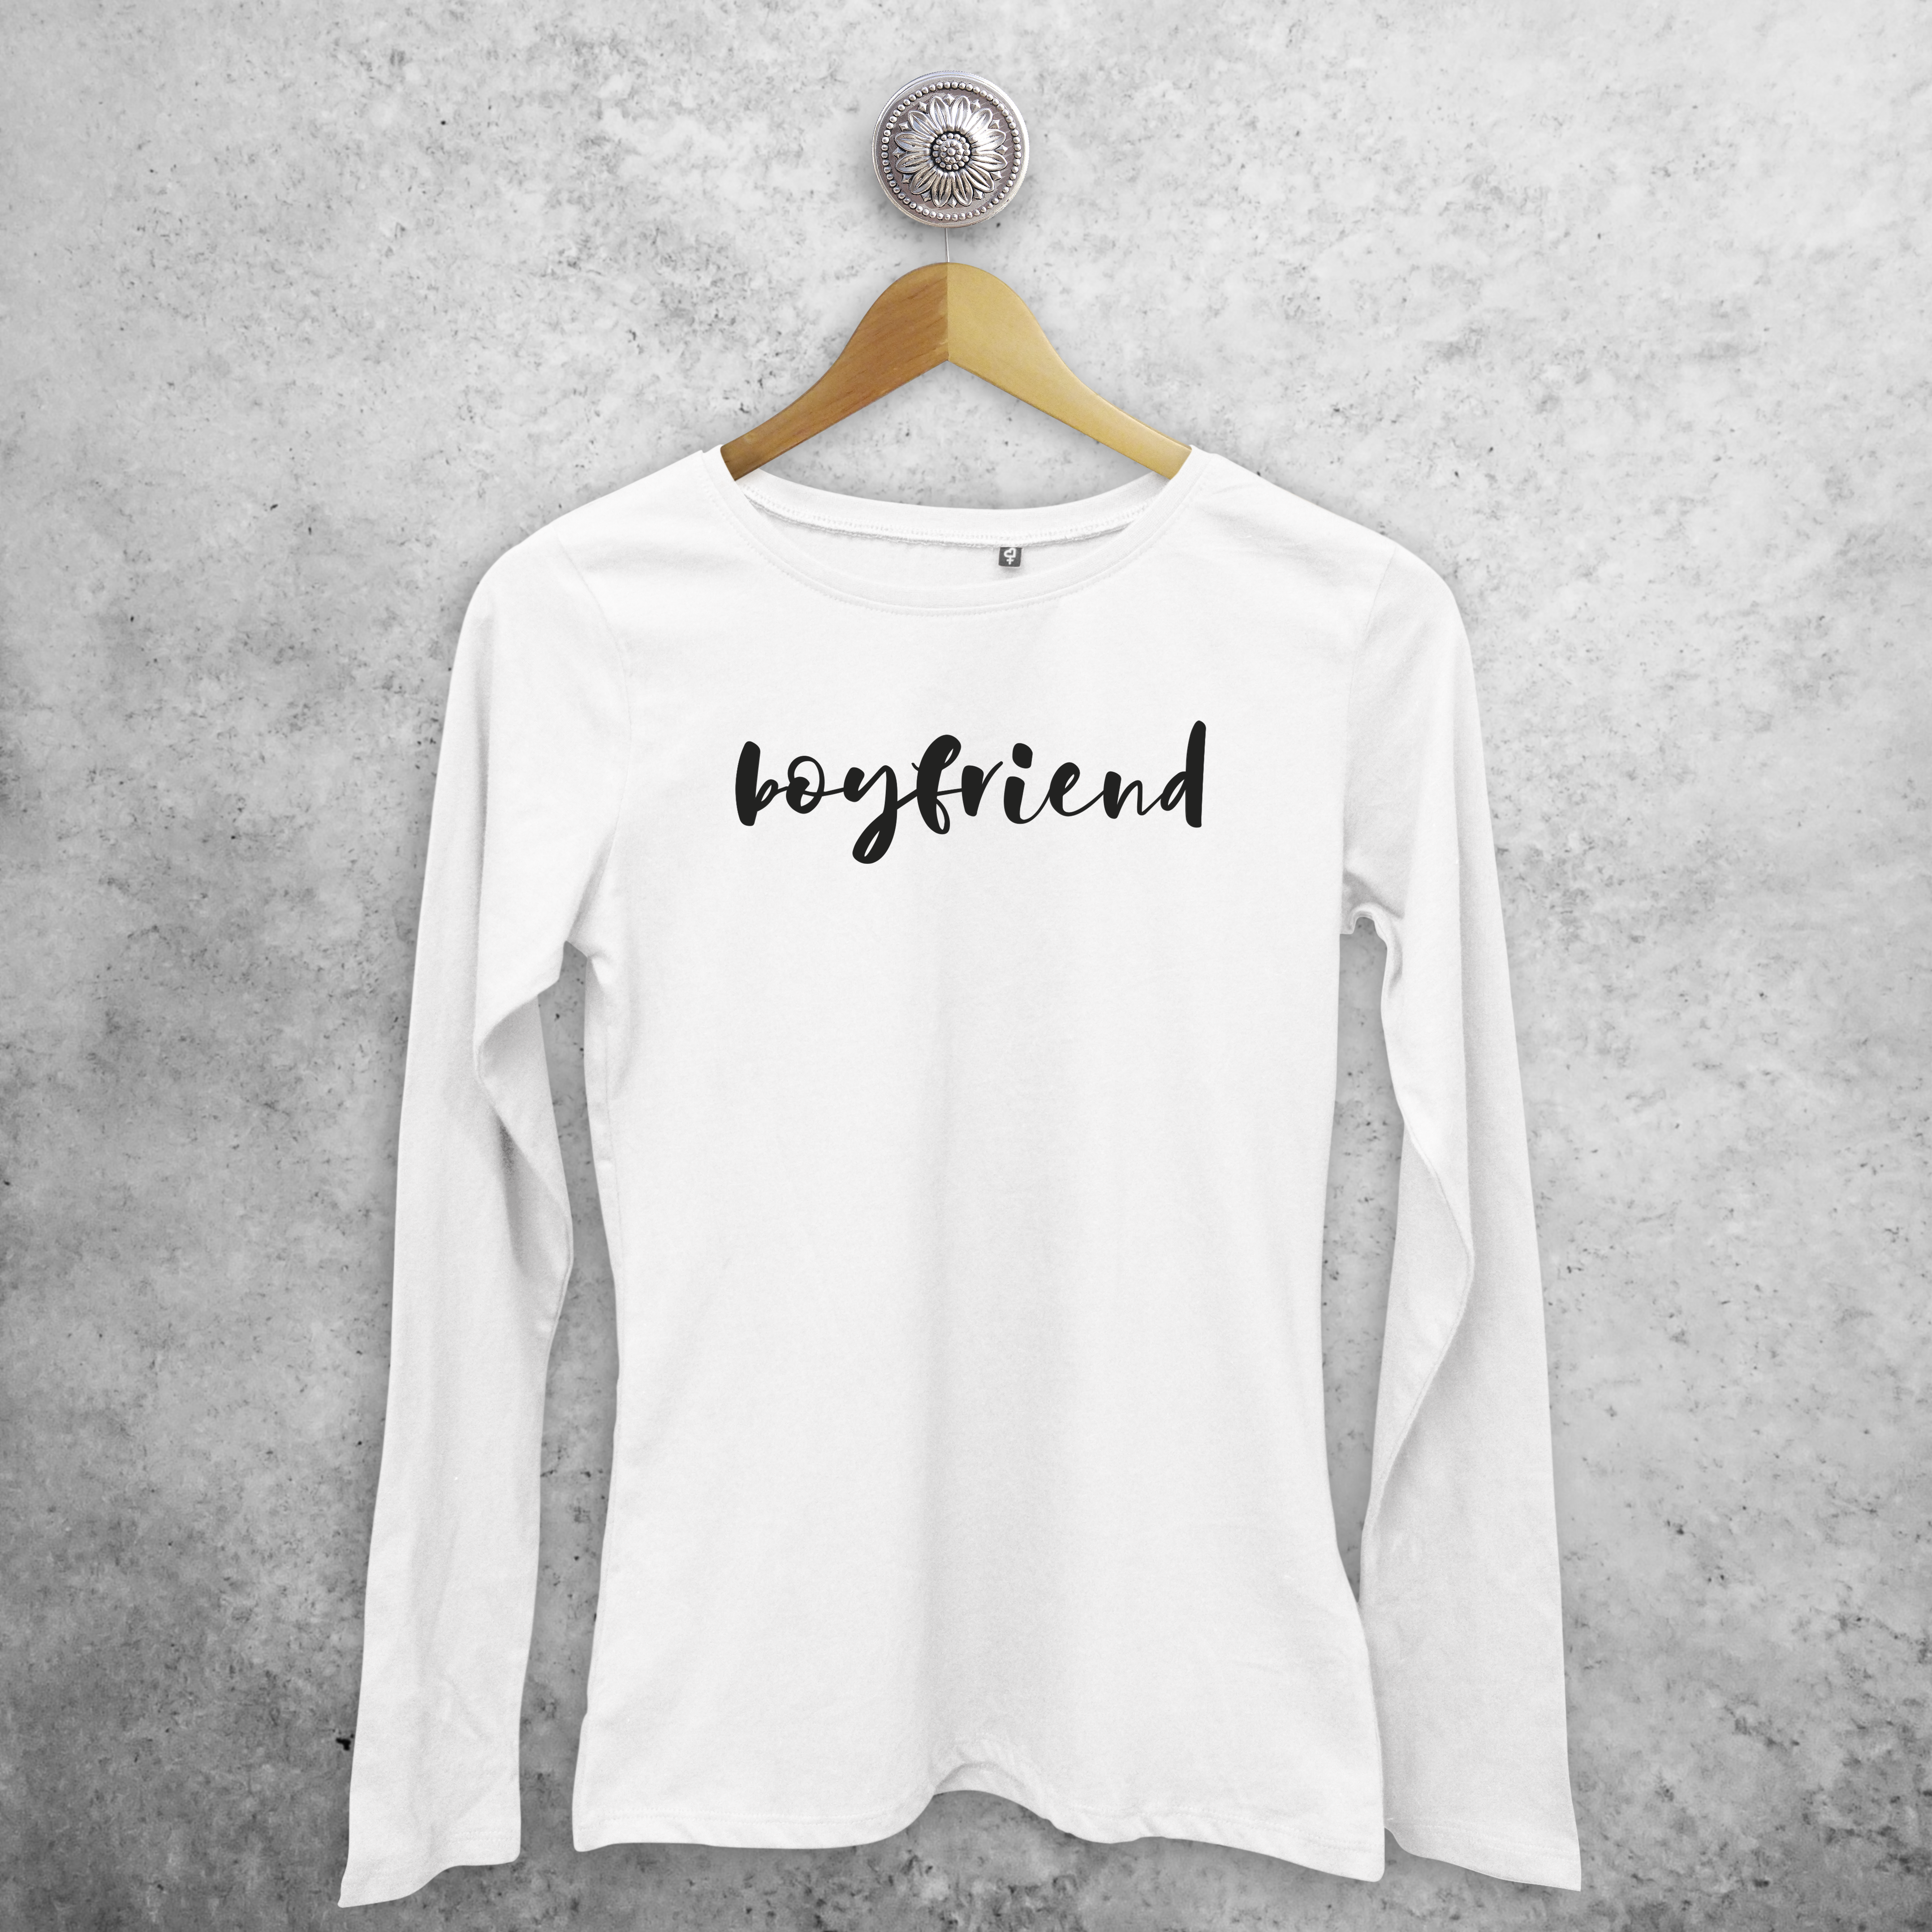 'Boyfriend' adult longsleeve shirt